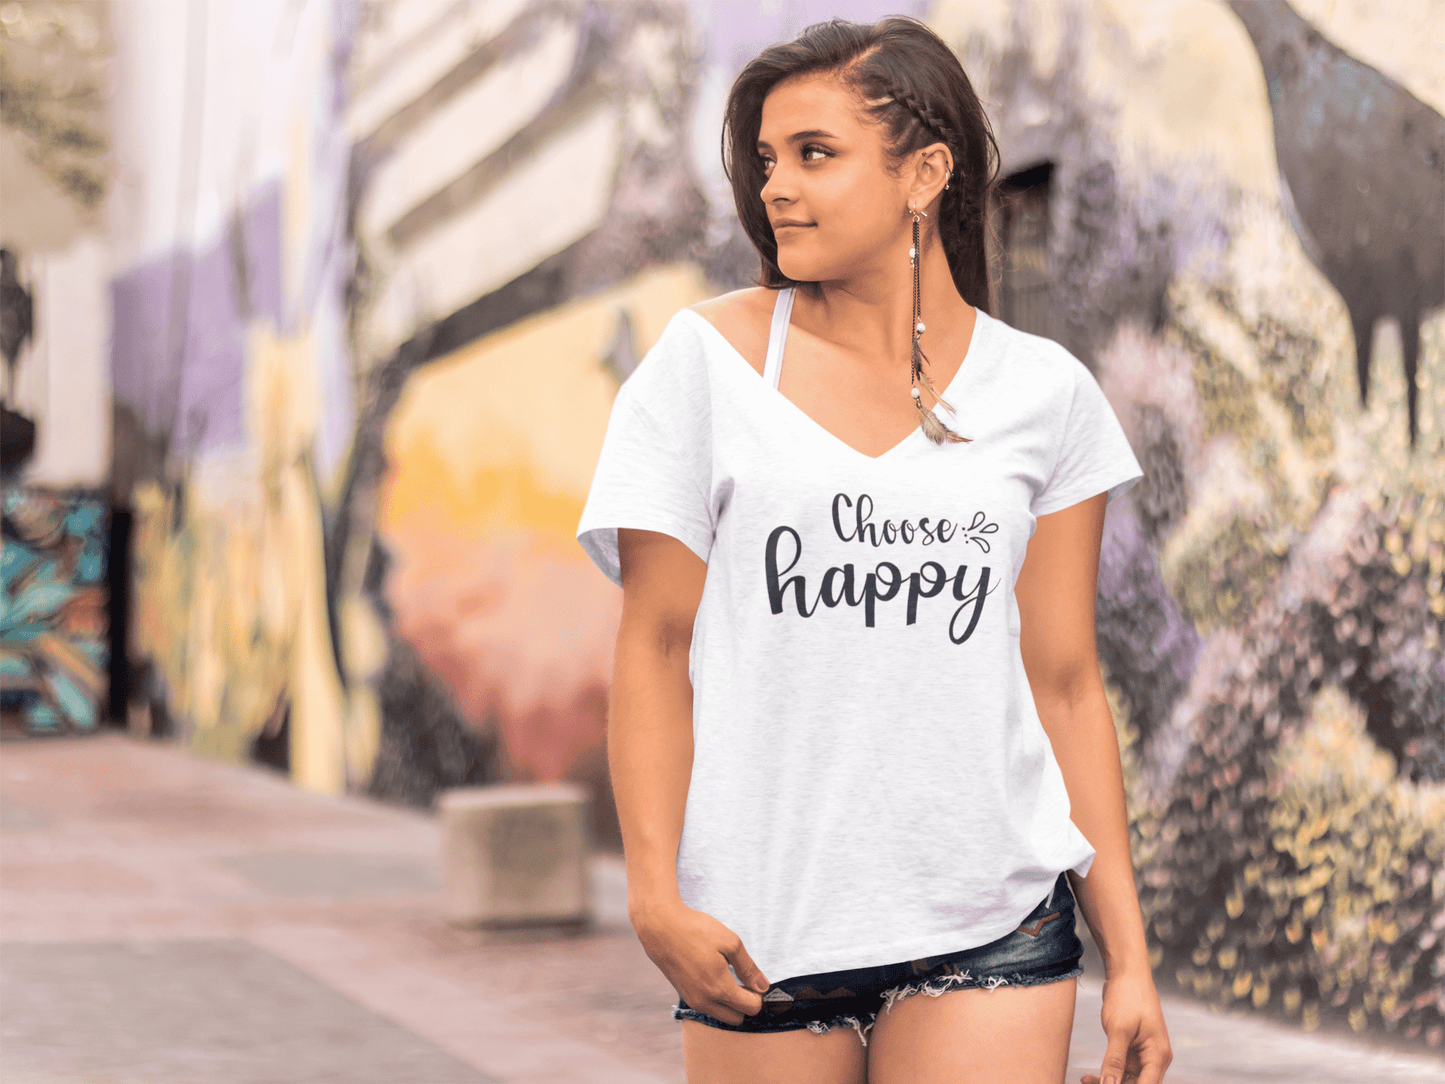 ULTRABASIC Women's T-Shirt Choose Happy - Short Sleeve Tee Shirt Gift Tops